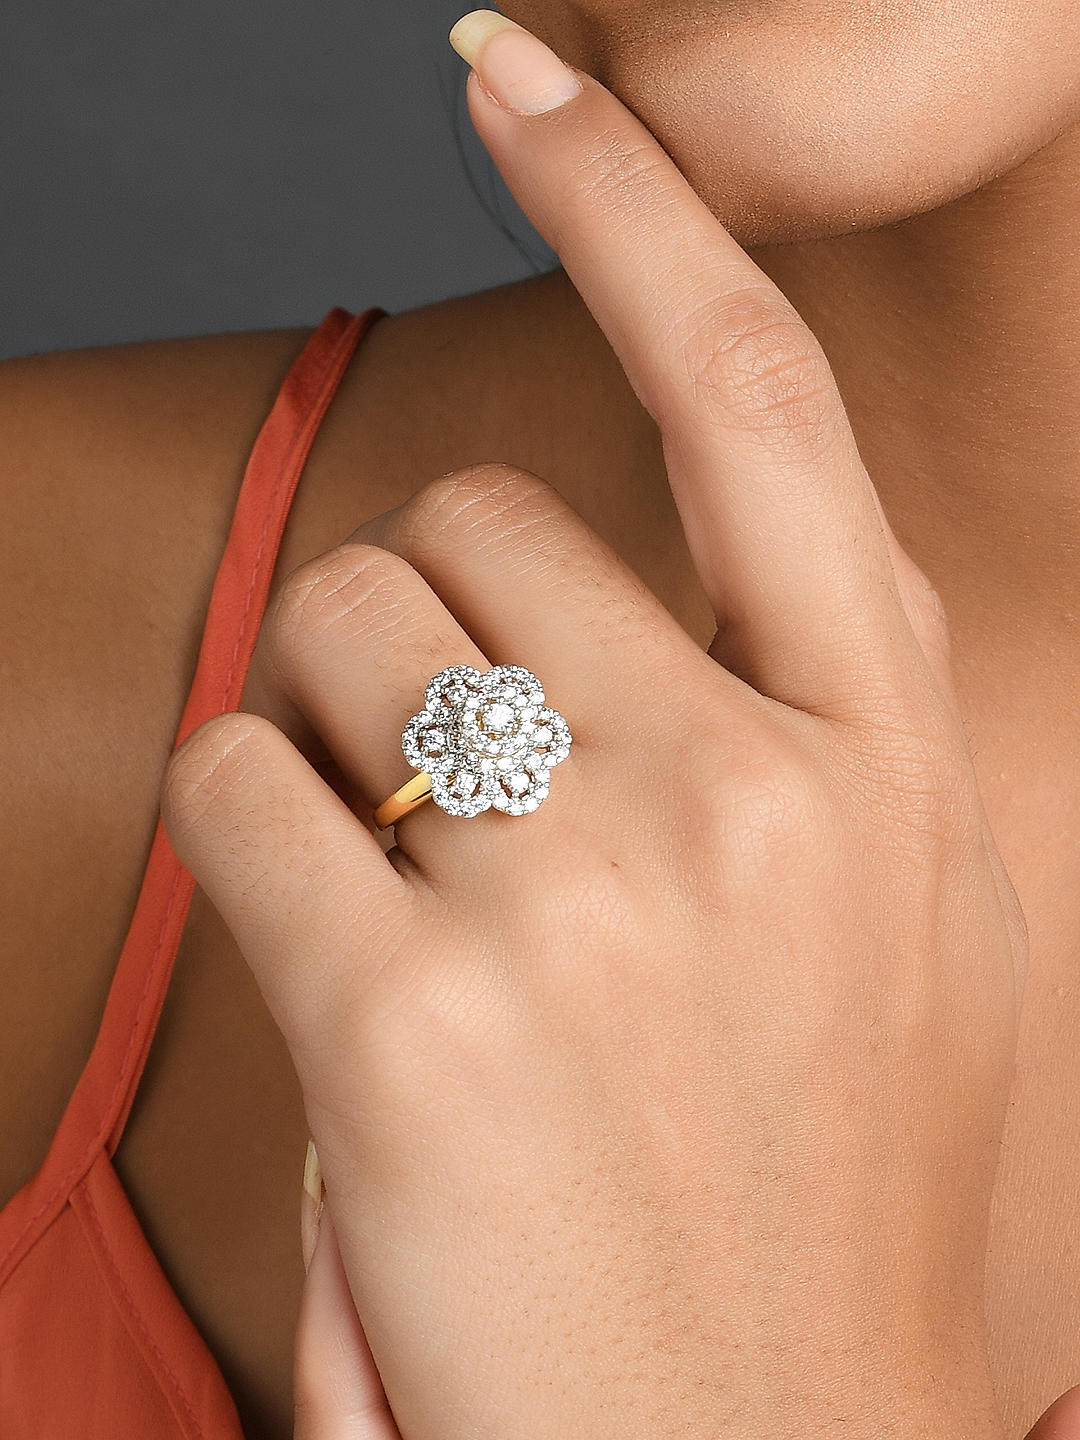 Rhodium American Diamond AD Finger Ring by Niscka-Ladies Ring Design